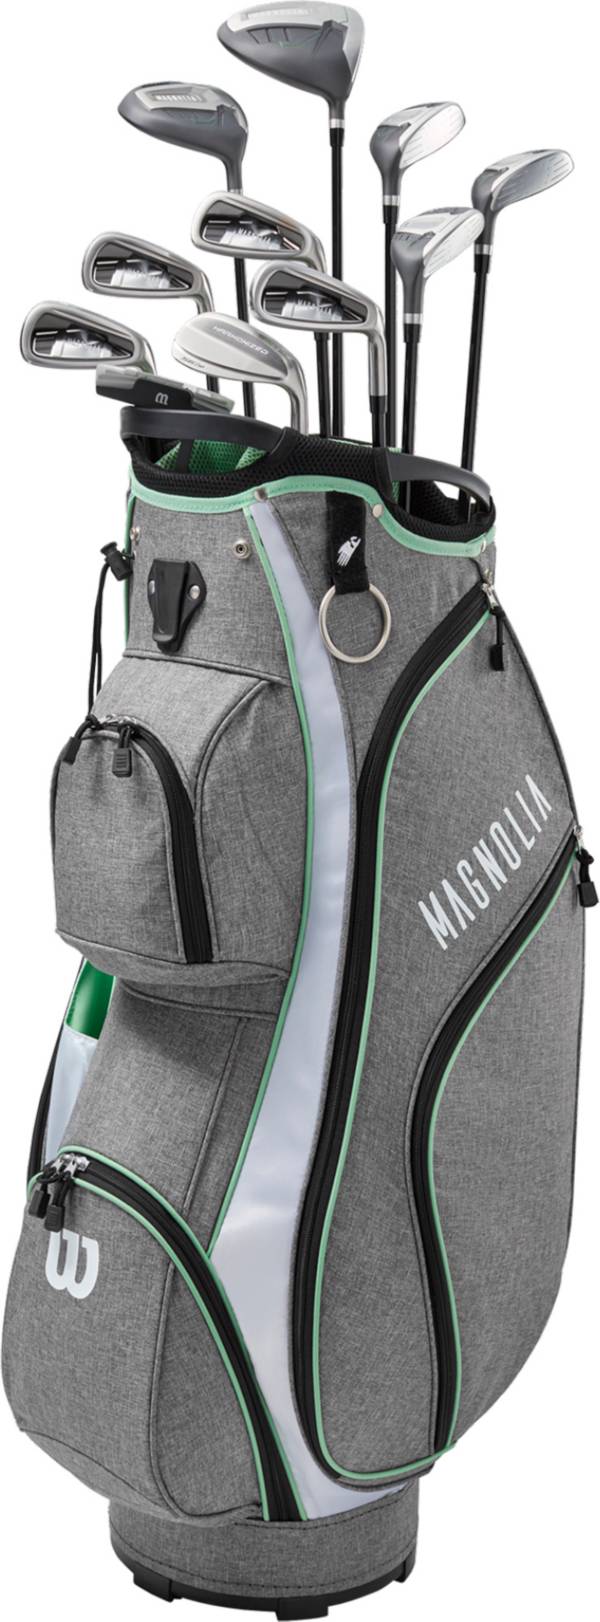 Wilson Women's Magnolia Cart Complete Golf Set product image